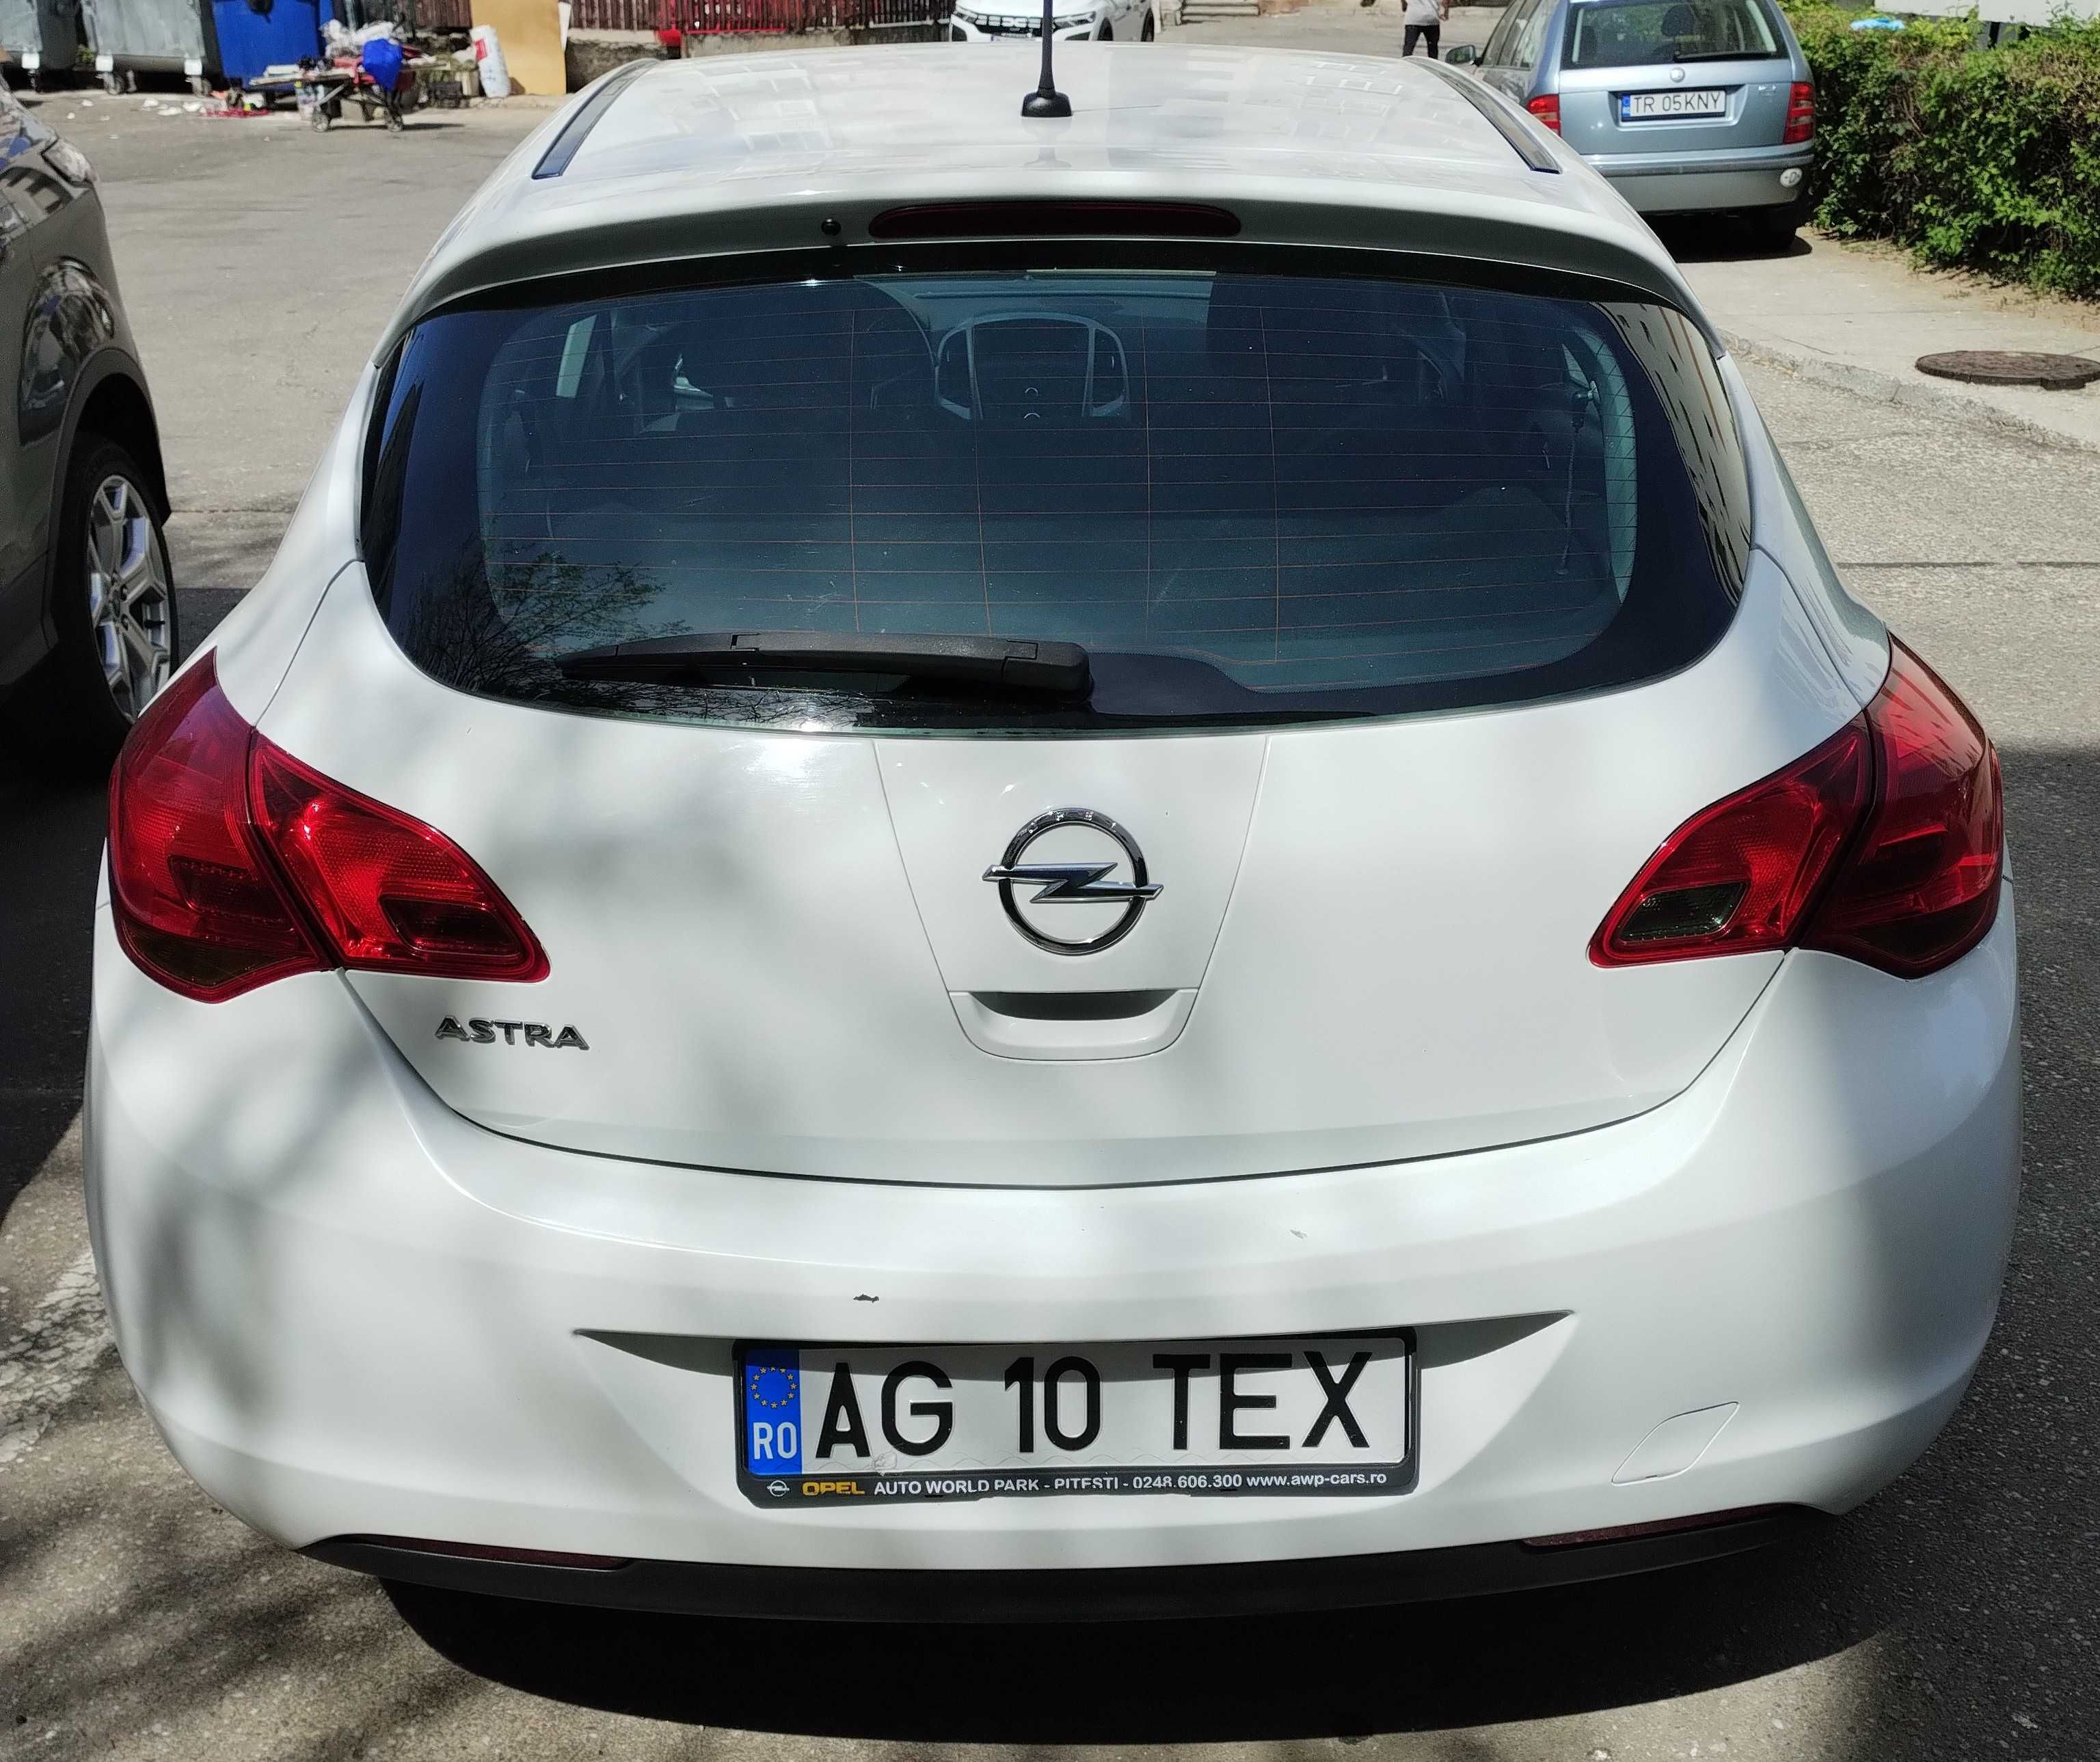 Opel Astra J, benzină ,motor 1.4, 100CP, rulaj 171500 km